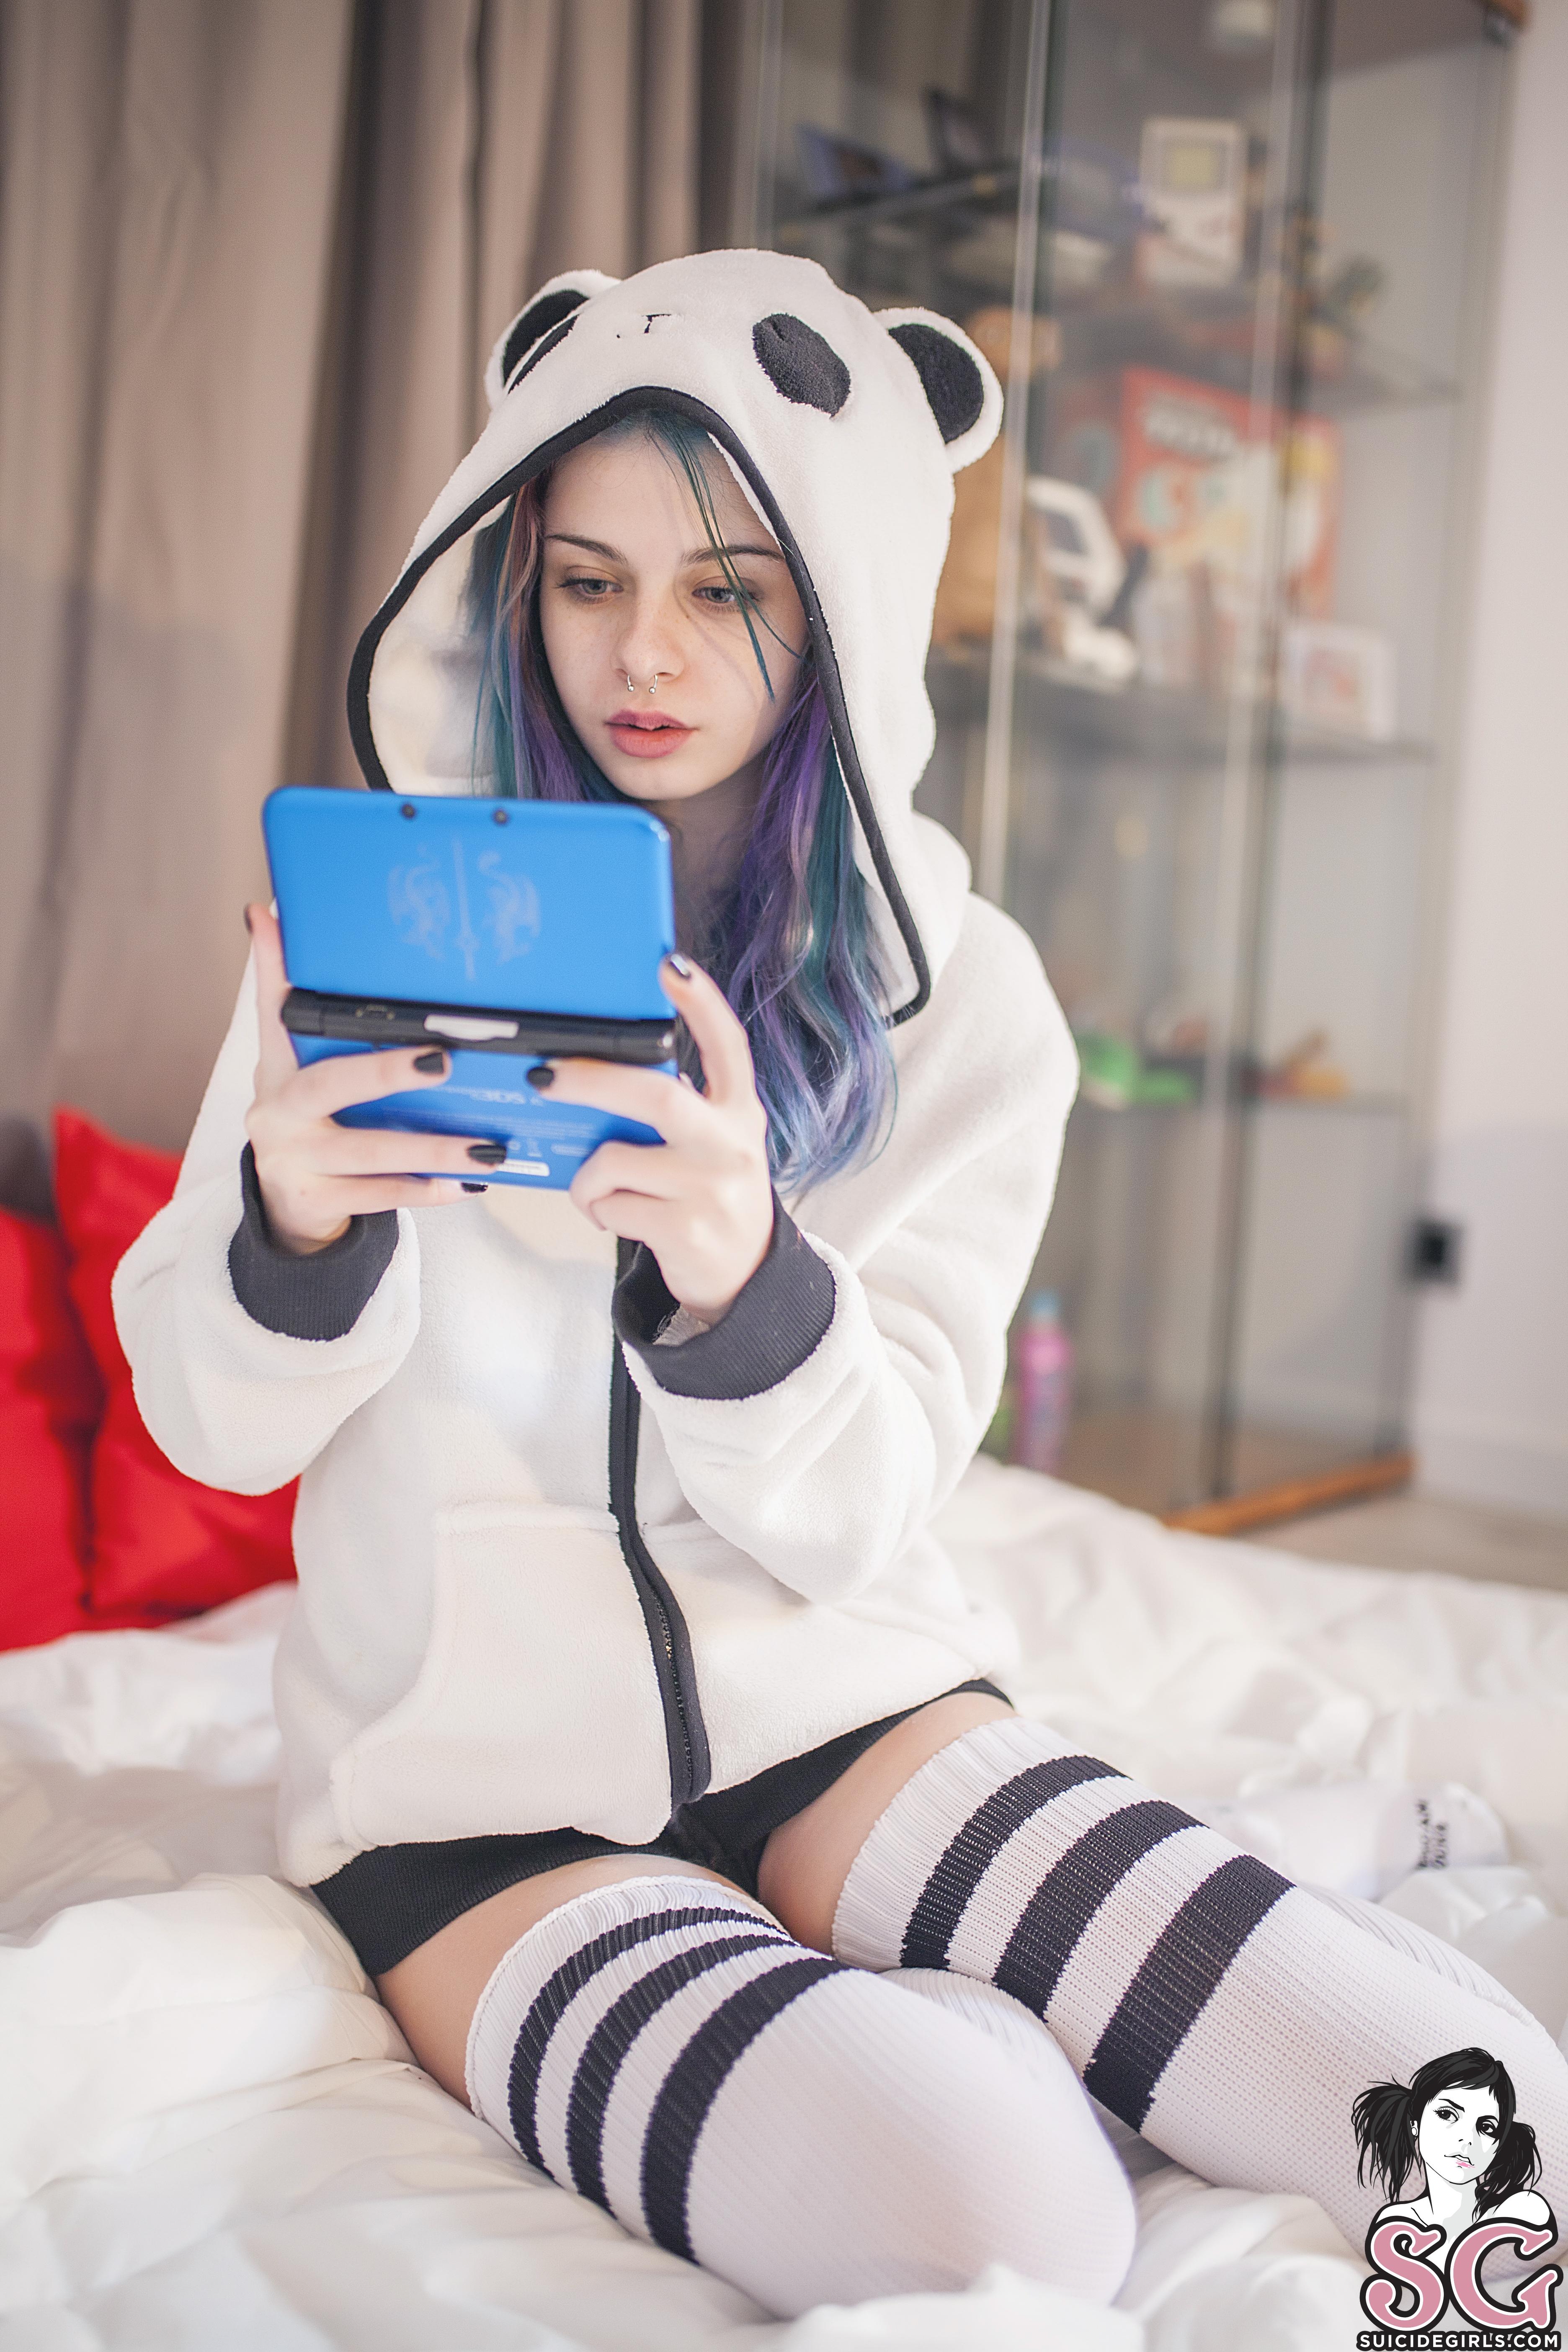 Bedroom Socks Bed Pillow Rainbow Hair Nintendo 3DS Women Thigh Highs 3744x5616